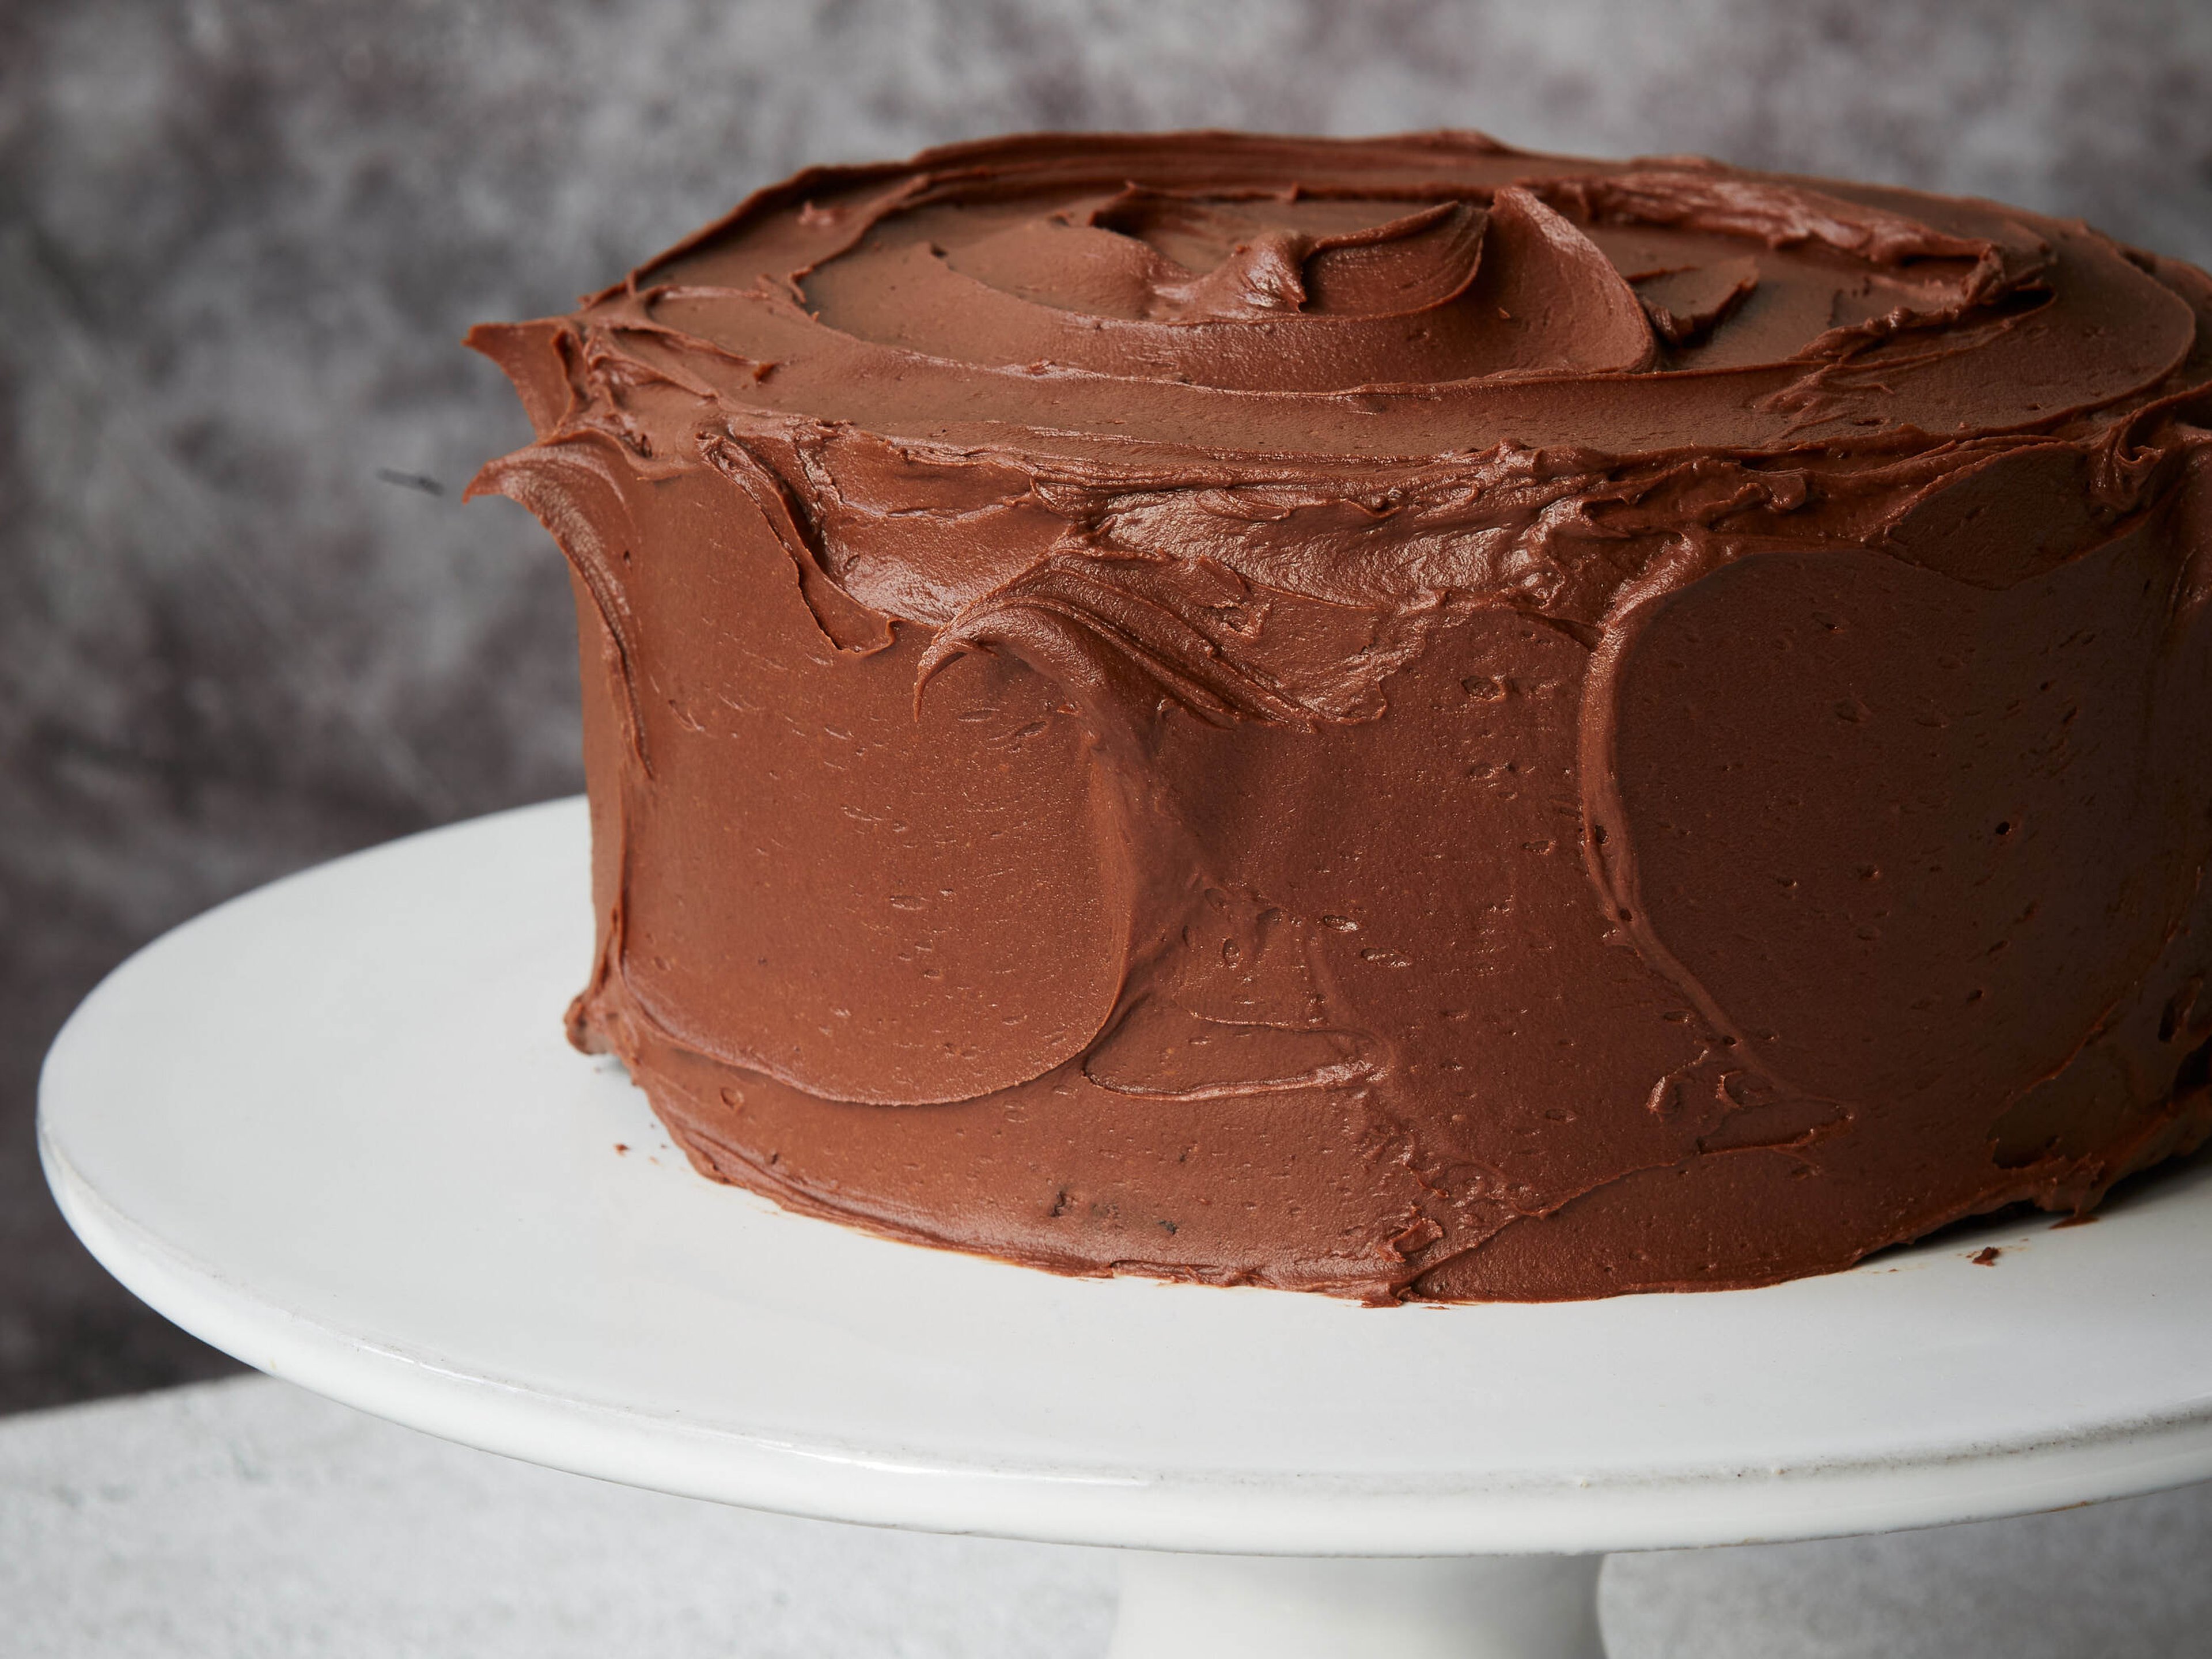 Chocolate sauerkraut cake with chocolate frosting